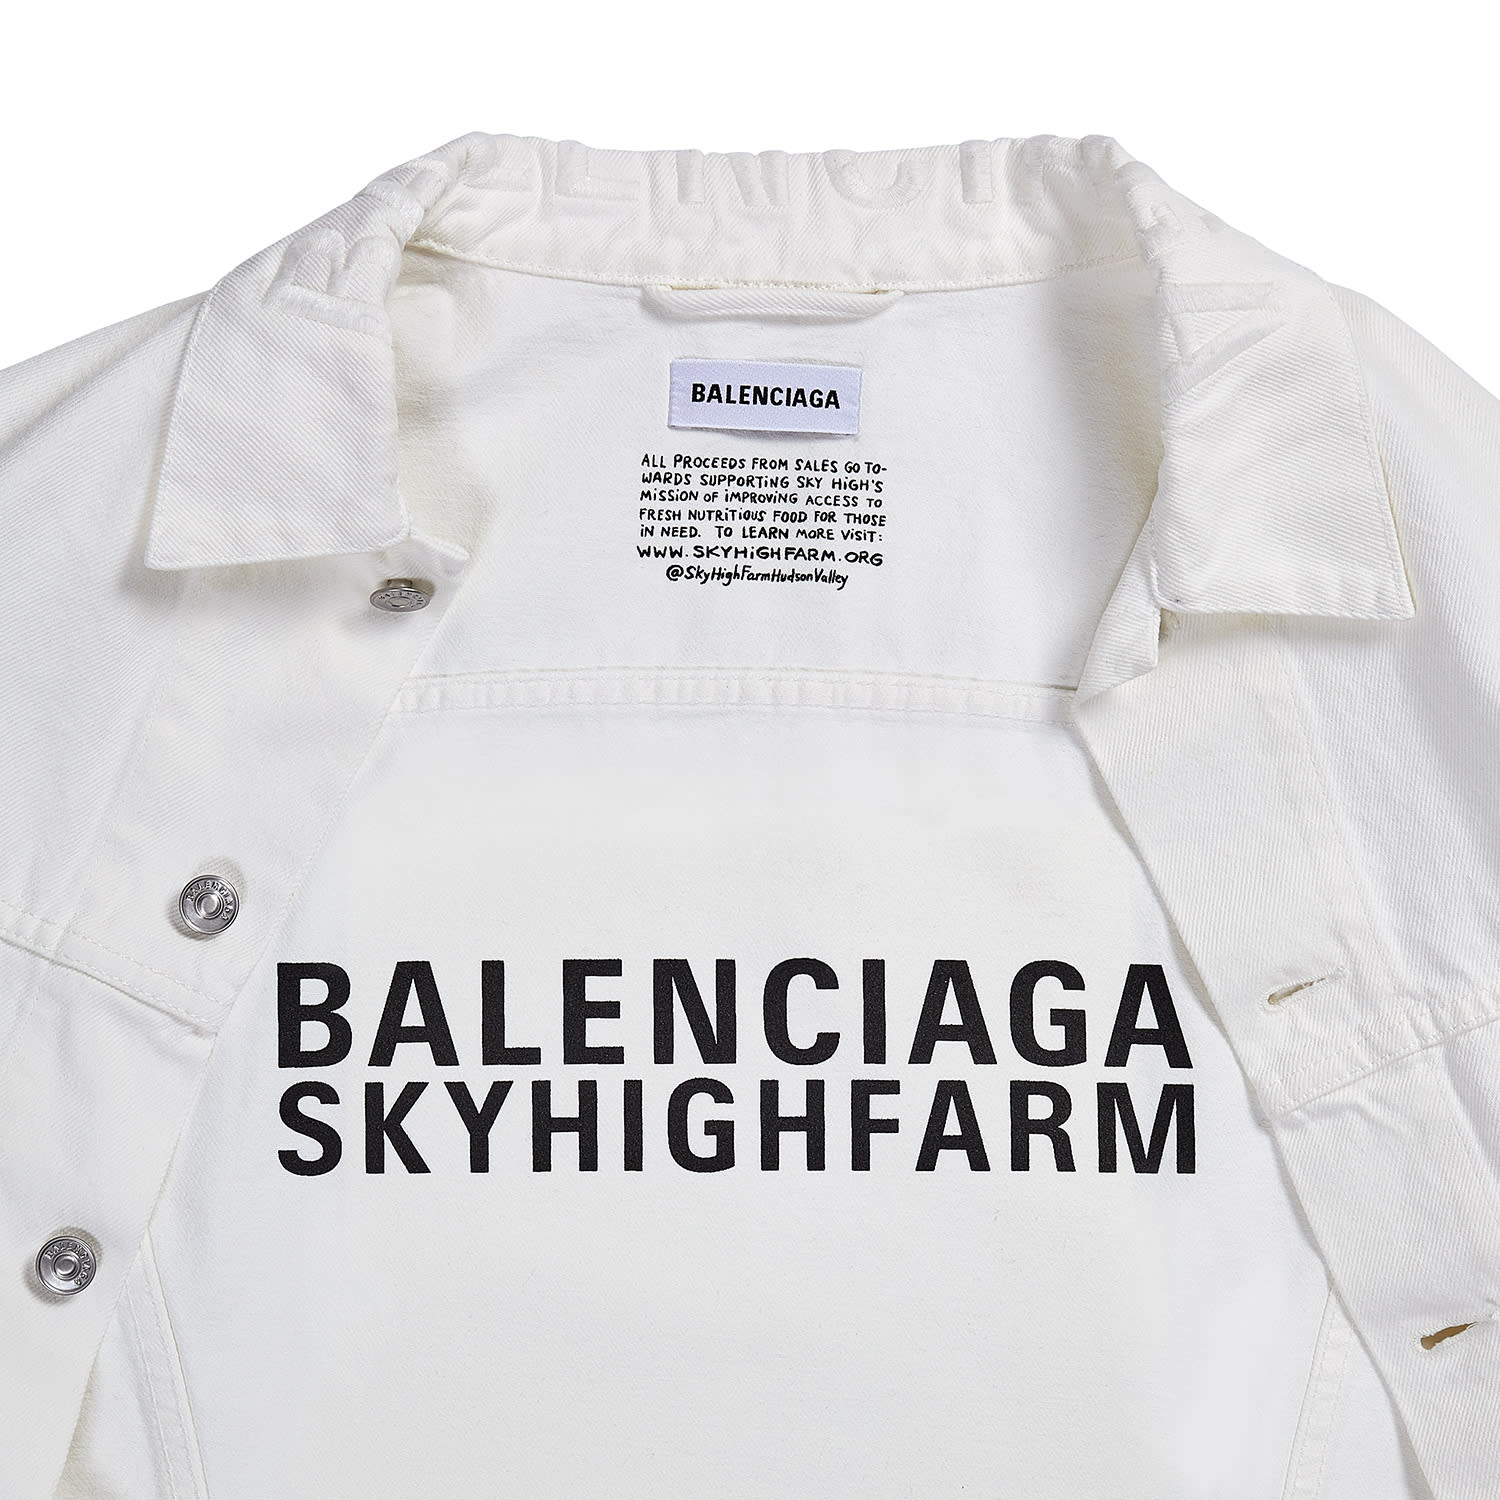 Image via Sky High Farm Workwear/Balenciaga